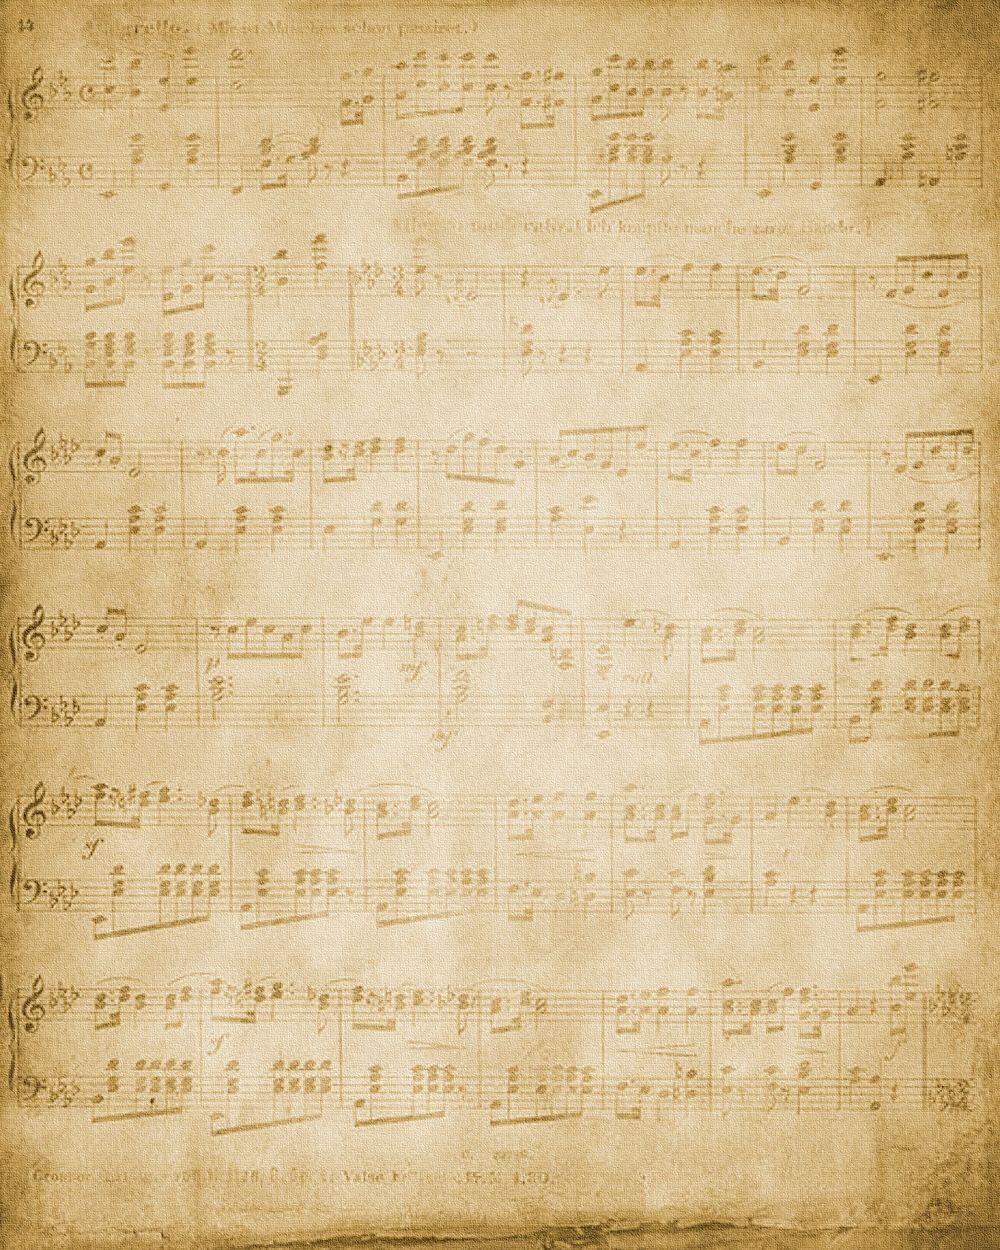 Free musical notes image, public domain music CC0 photo.